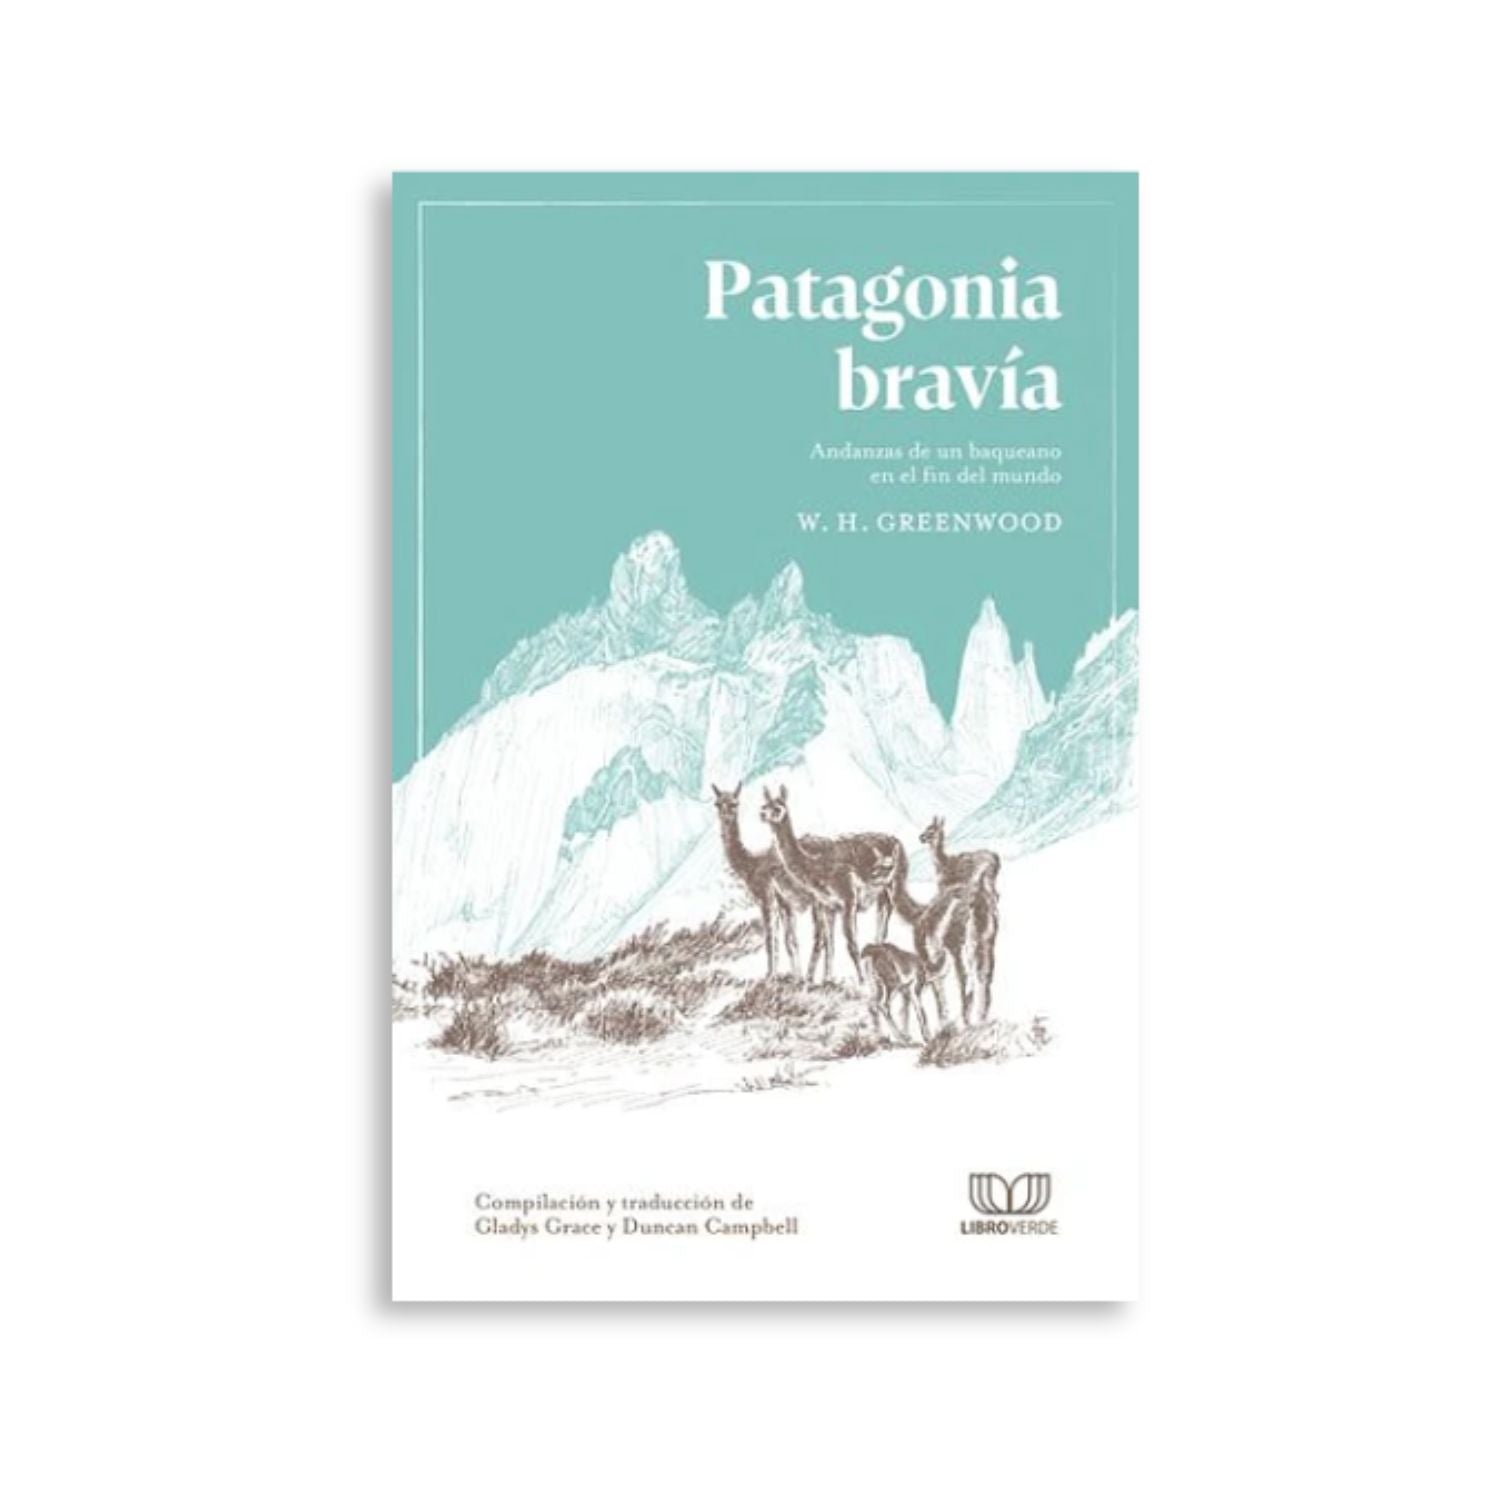 Patagonia bravía